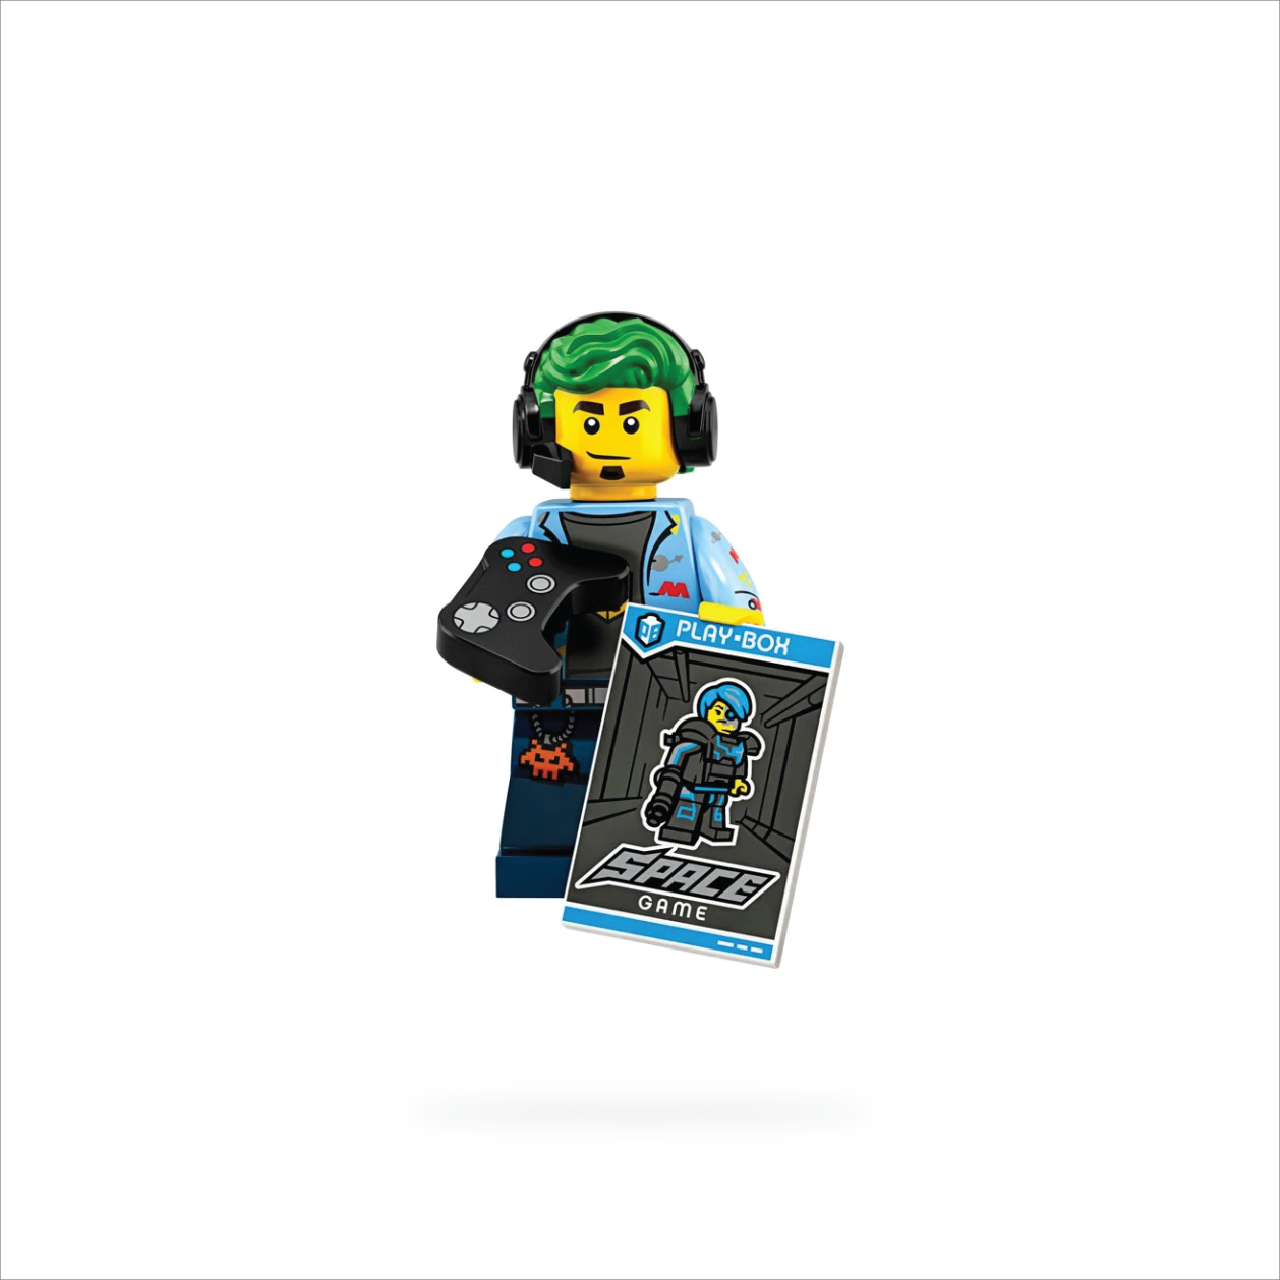 LEGO 71025-01 Minifigure Series 19 - Video Game Champ